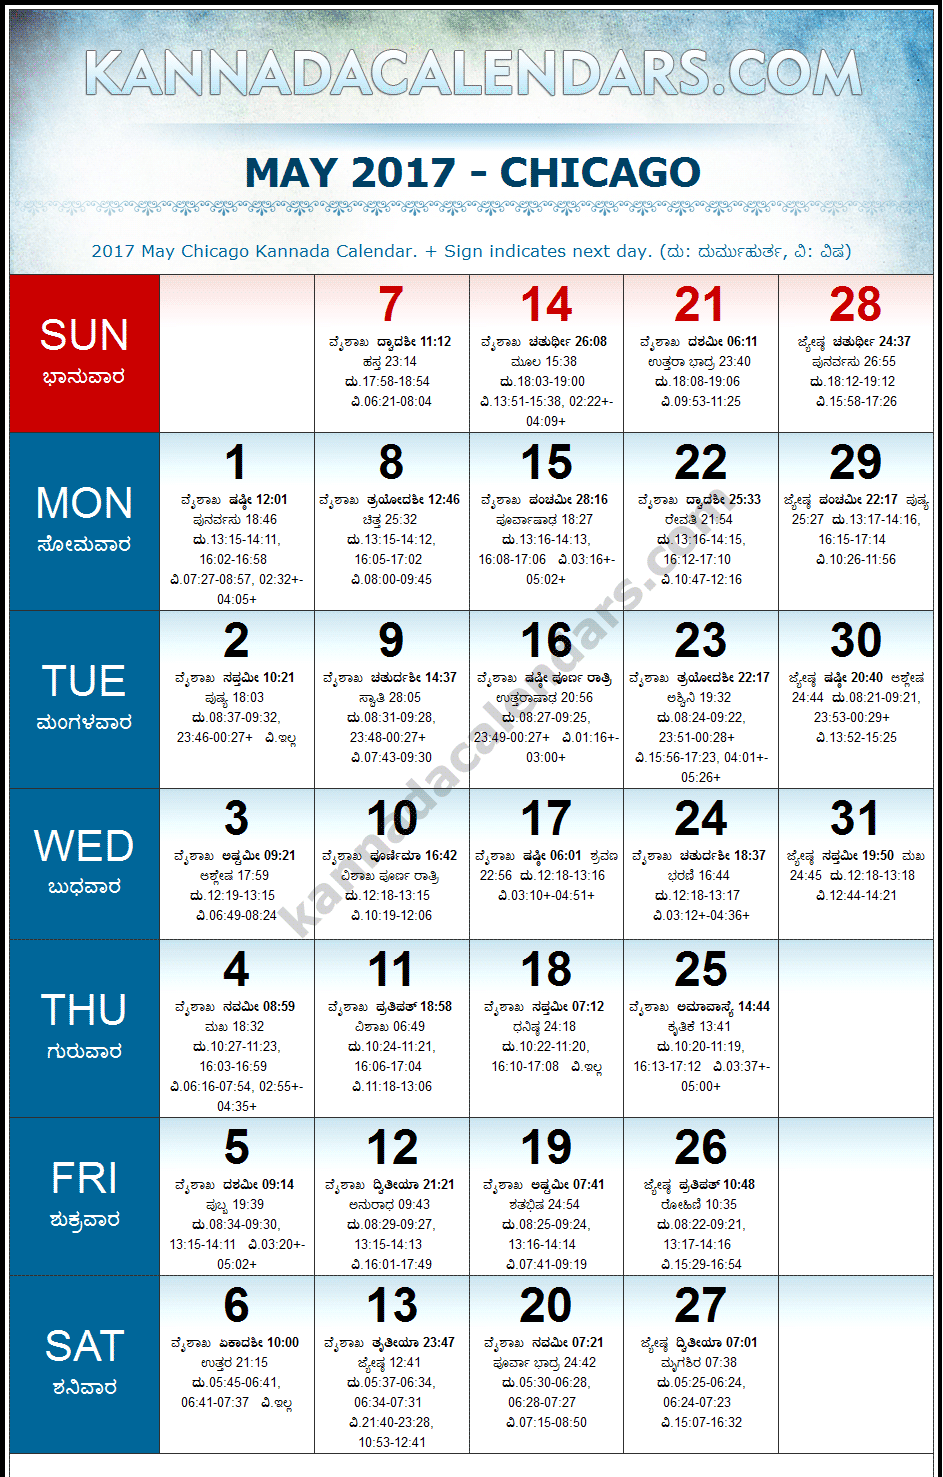 May 2017 Kannada Calendar for Chicago, USA